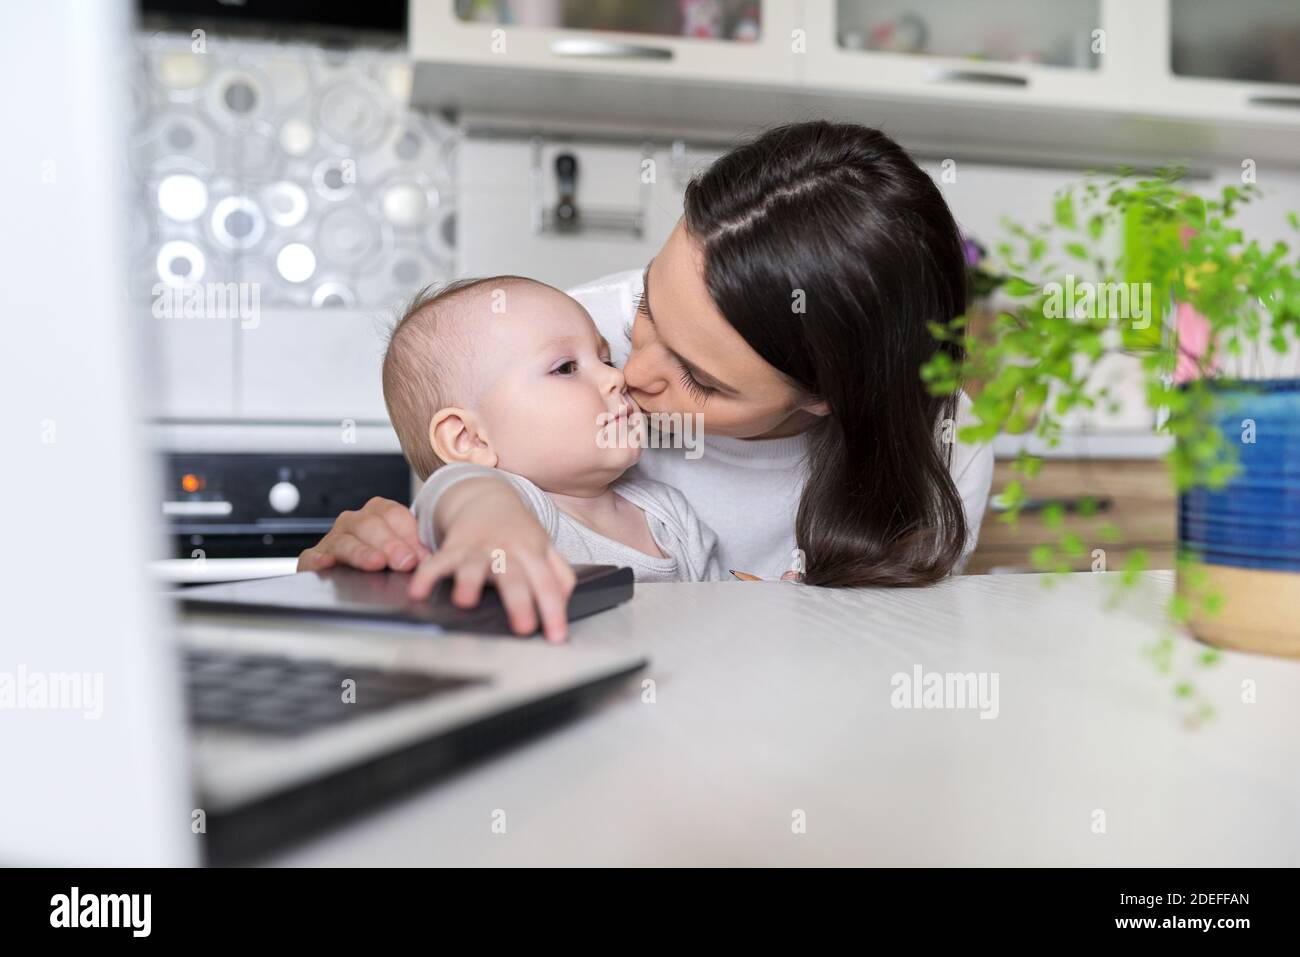 Mum Baby Laptop Fotos e Imágenes de stock Alamy